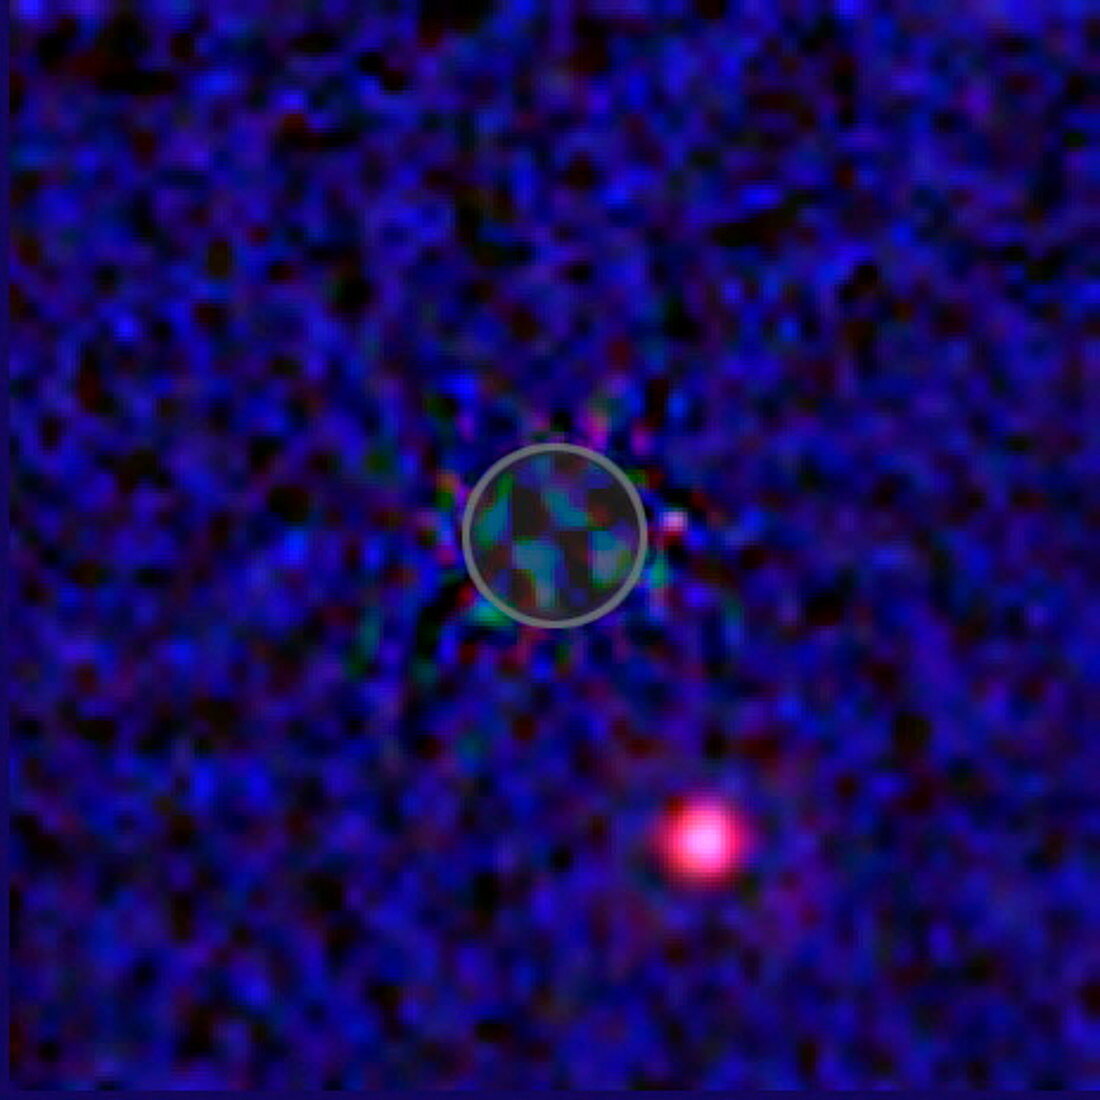 Extrasolar planet 2M1207